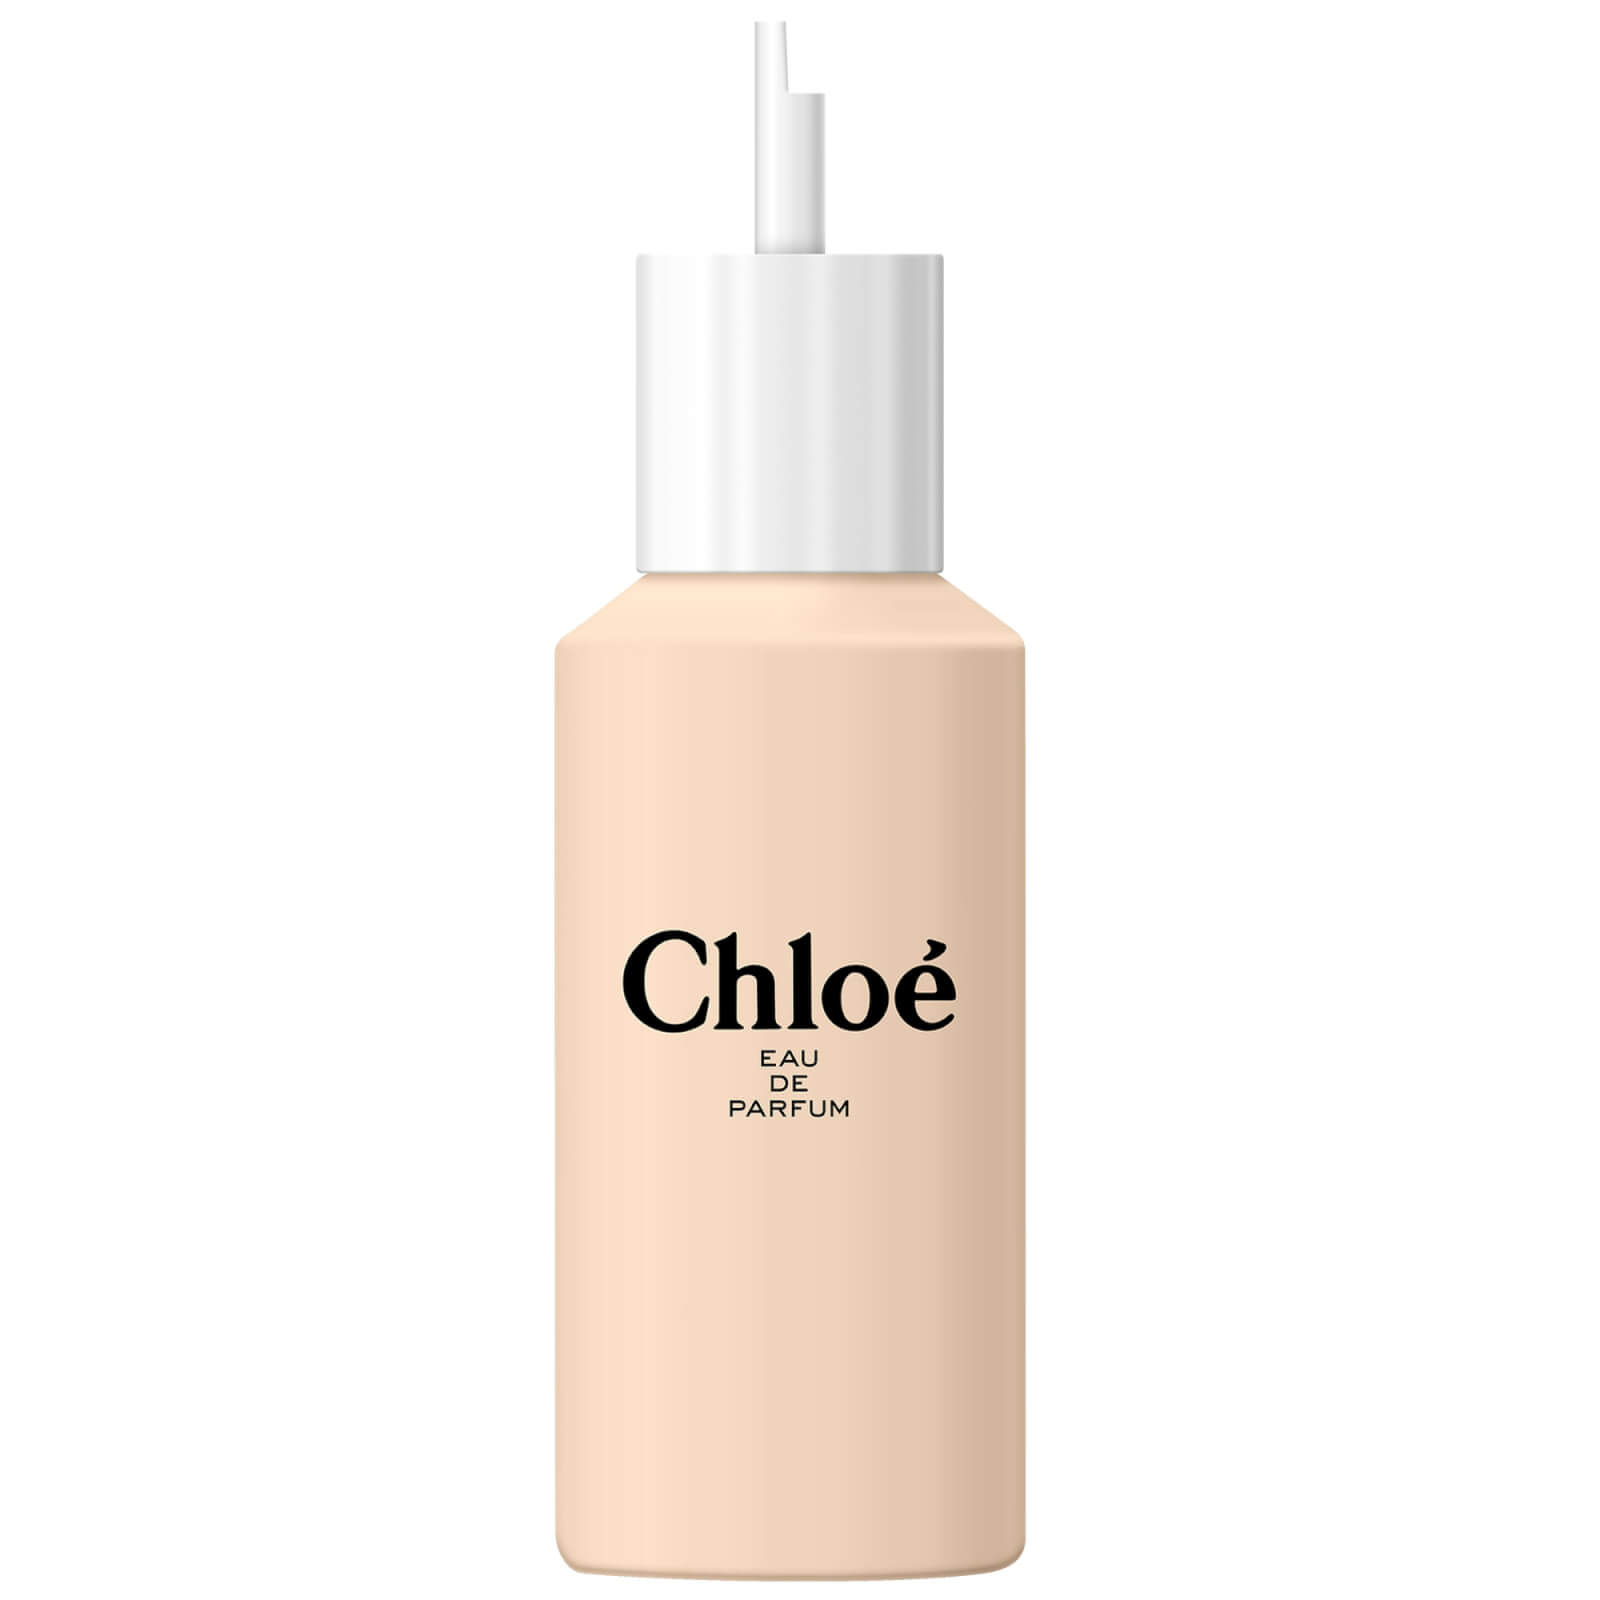 Chloe Eau de Parfum Refill 150ml